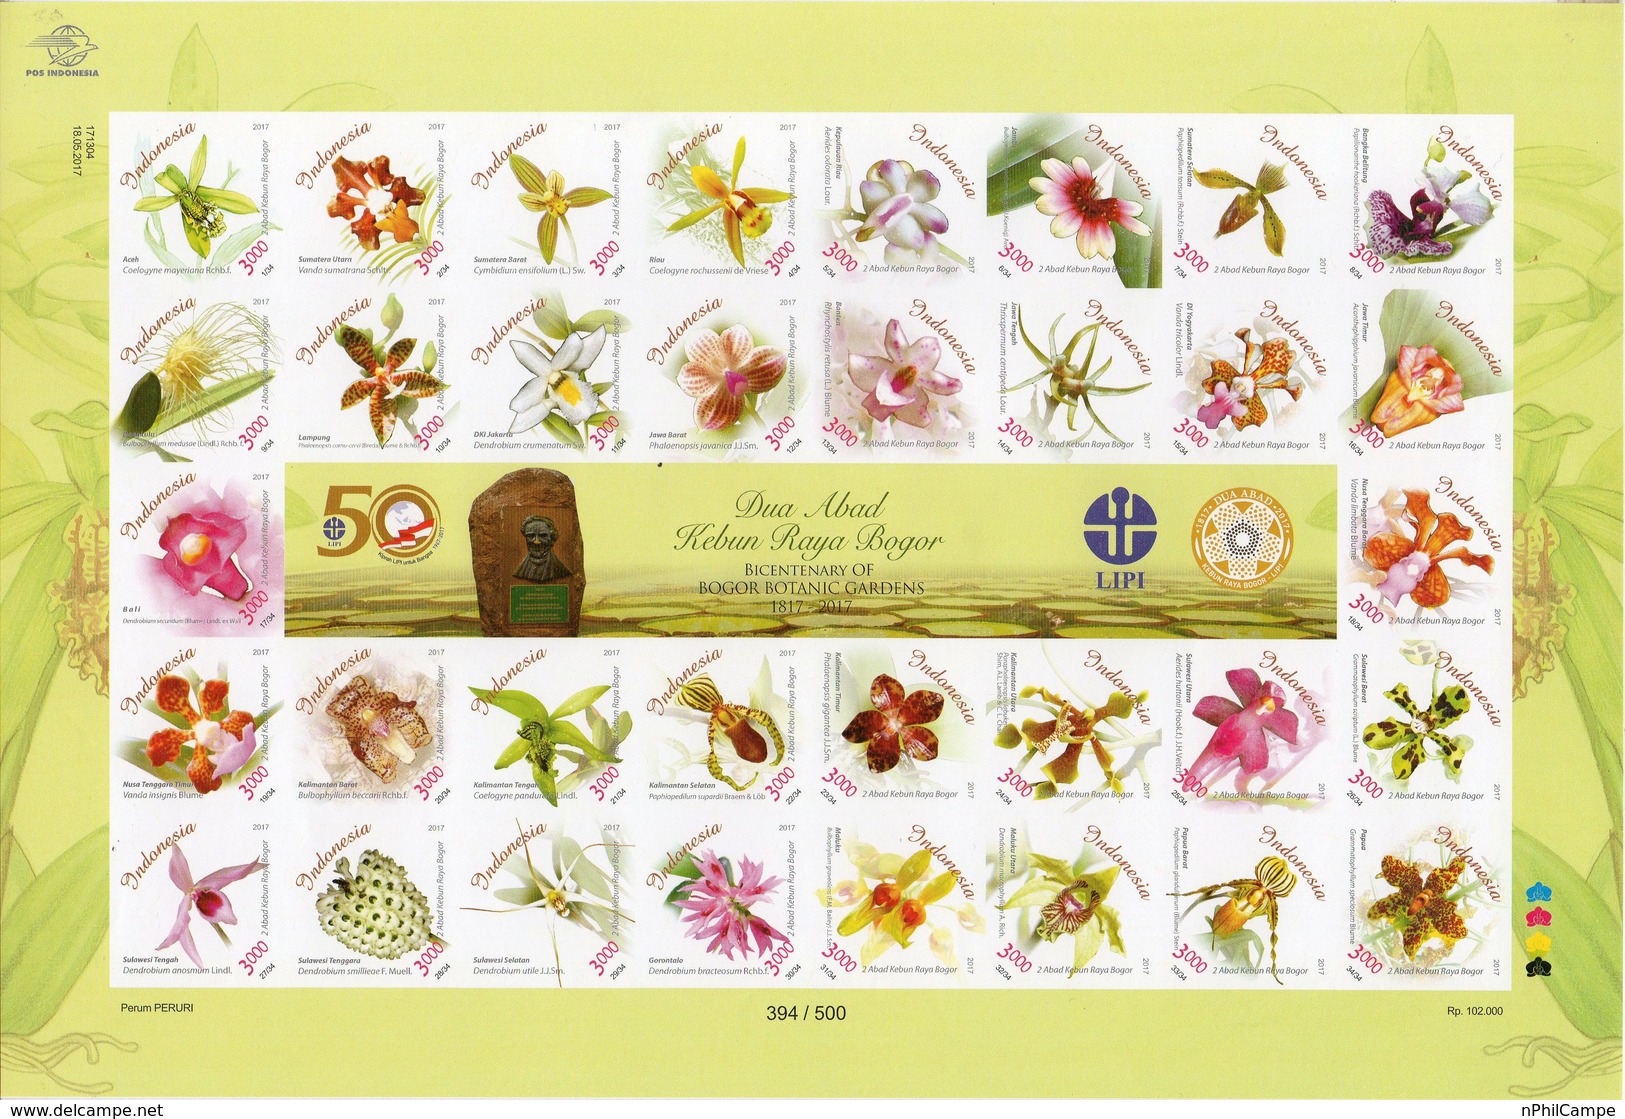 Indonesia Stamps 2017, Full Sheets Bicentenary Of Bogor Botanic Gardens IMPERF MNH - Indonesia